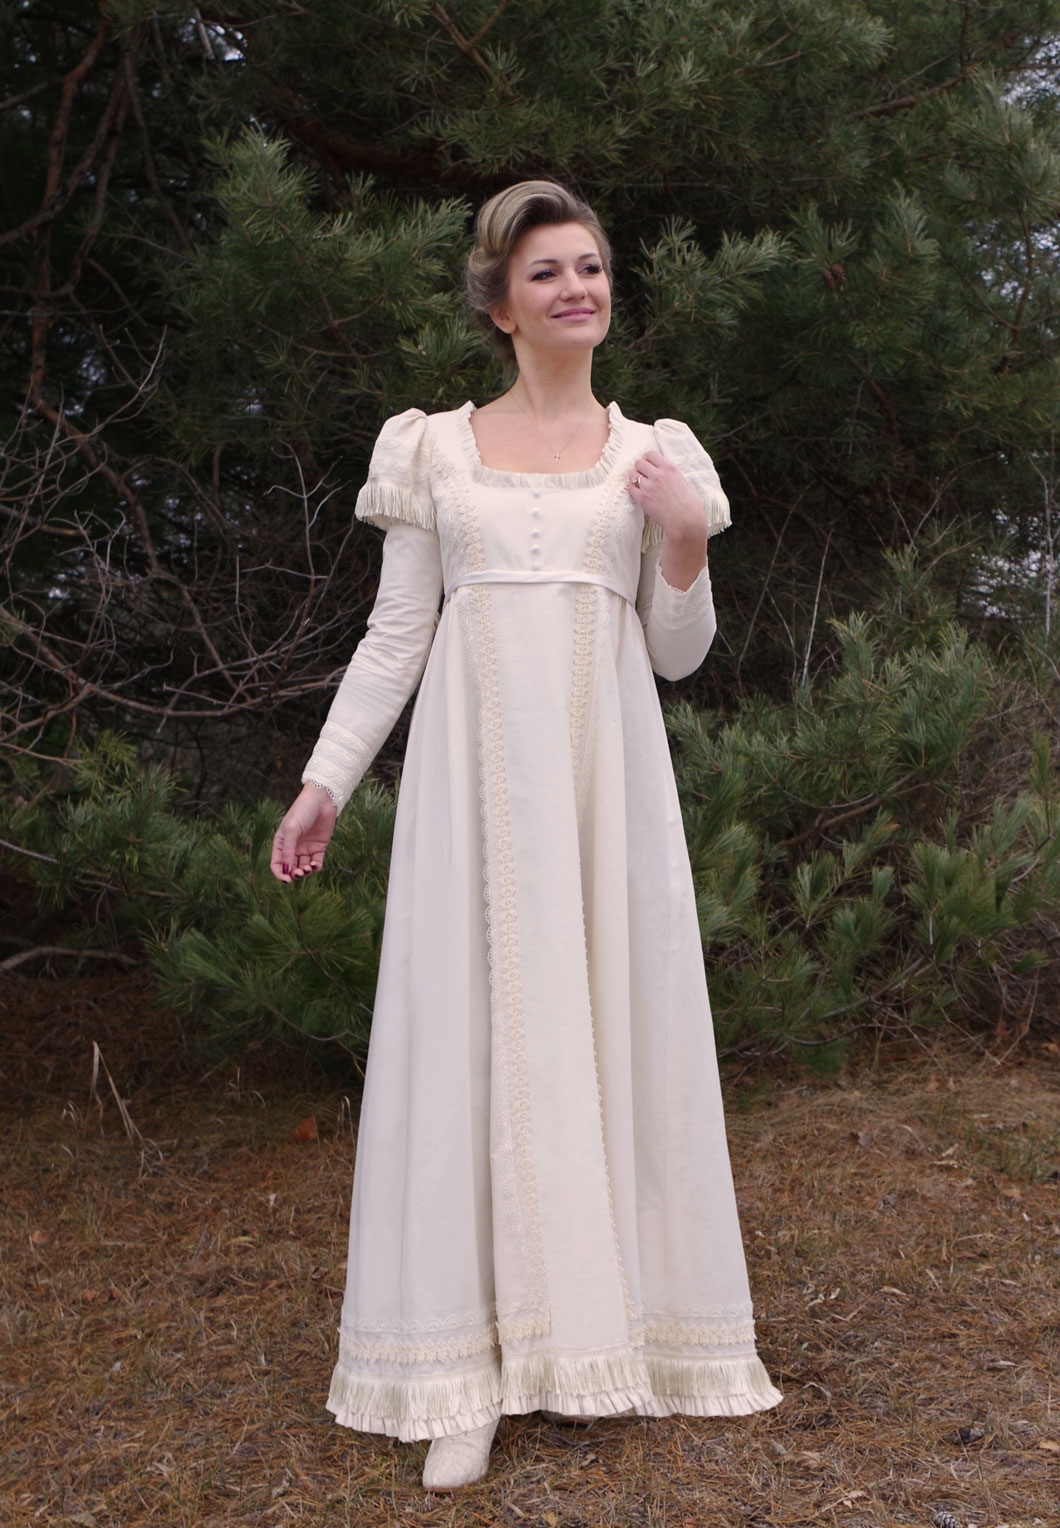 CUSTOM Elegant Princess Wedding Bridal Ball Regency Gown Dress with ha –  Matti's Millinery & Costumes